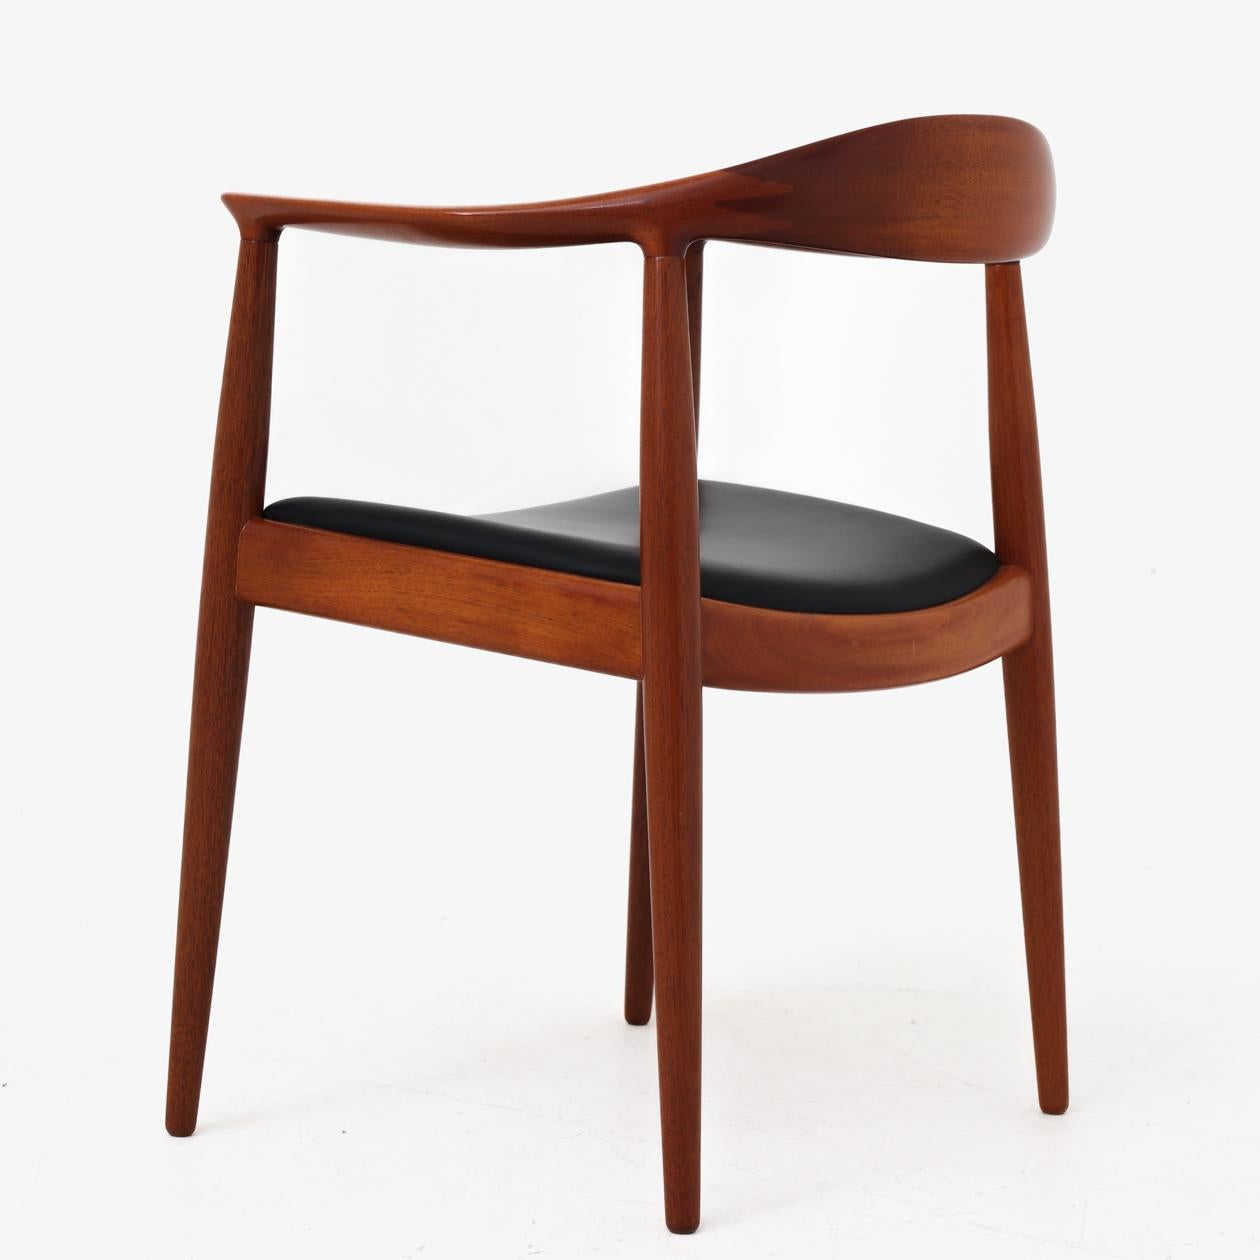 JH 503 - The Chair in mahogany and black leather. Hans J. Wegner / Johannes Hansen